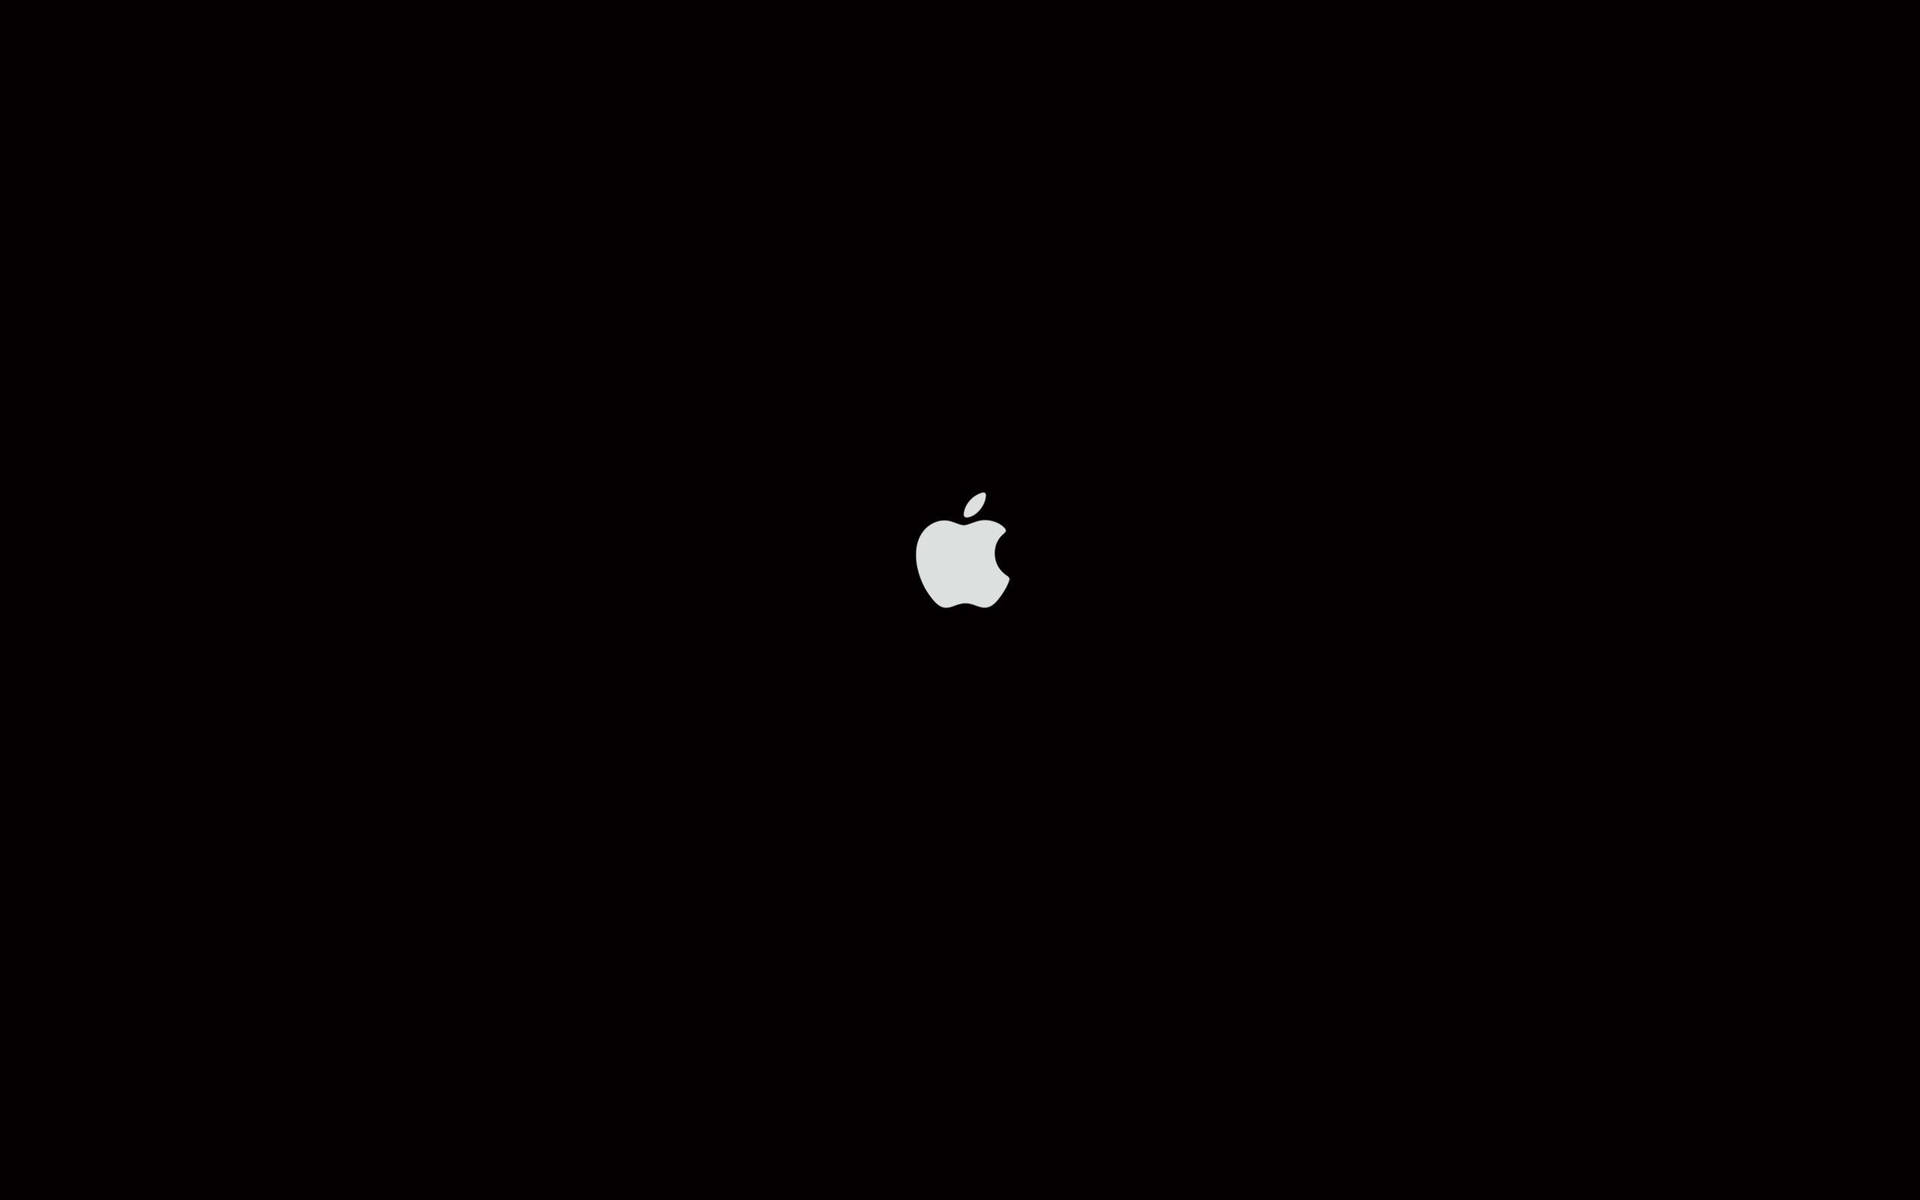 Plain Black And White Apple Logo